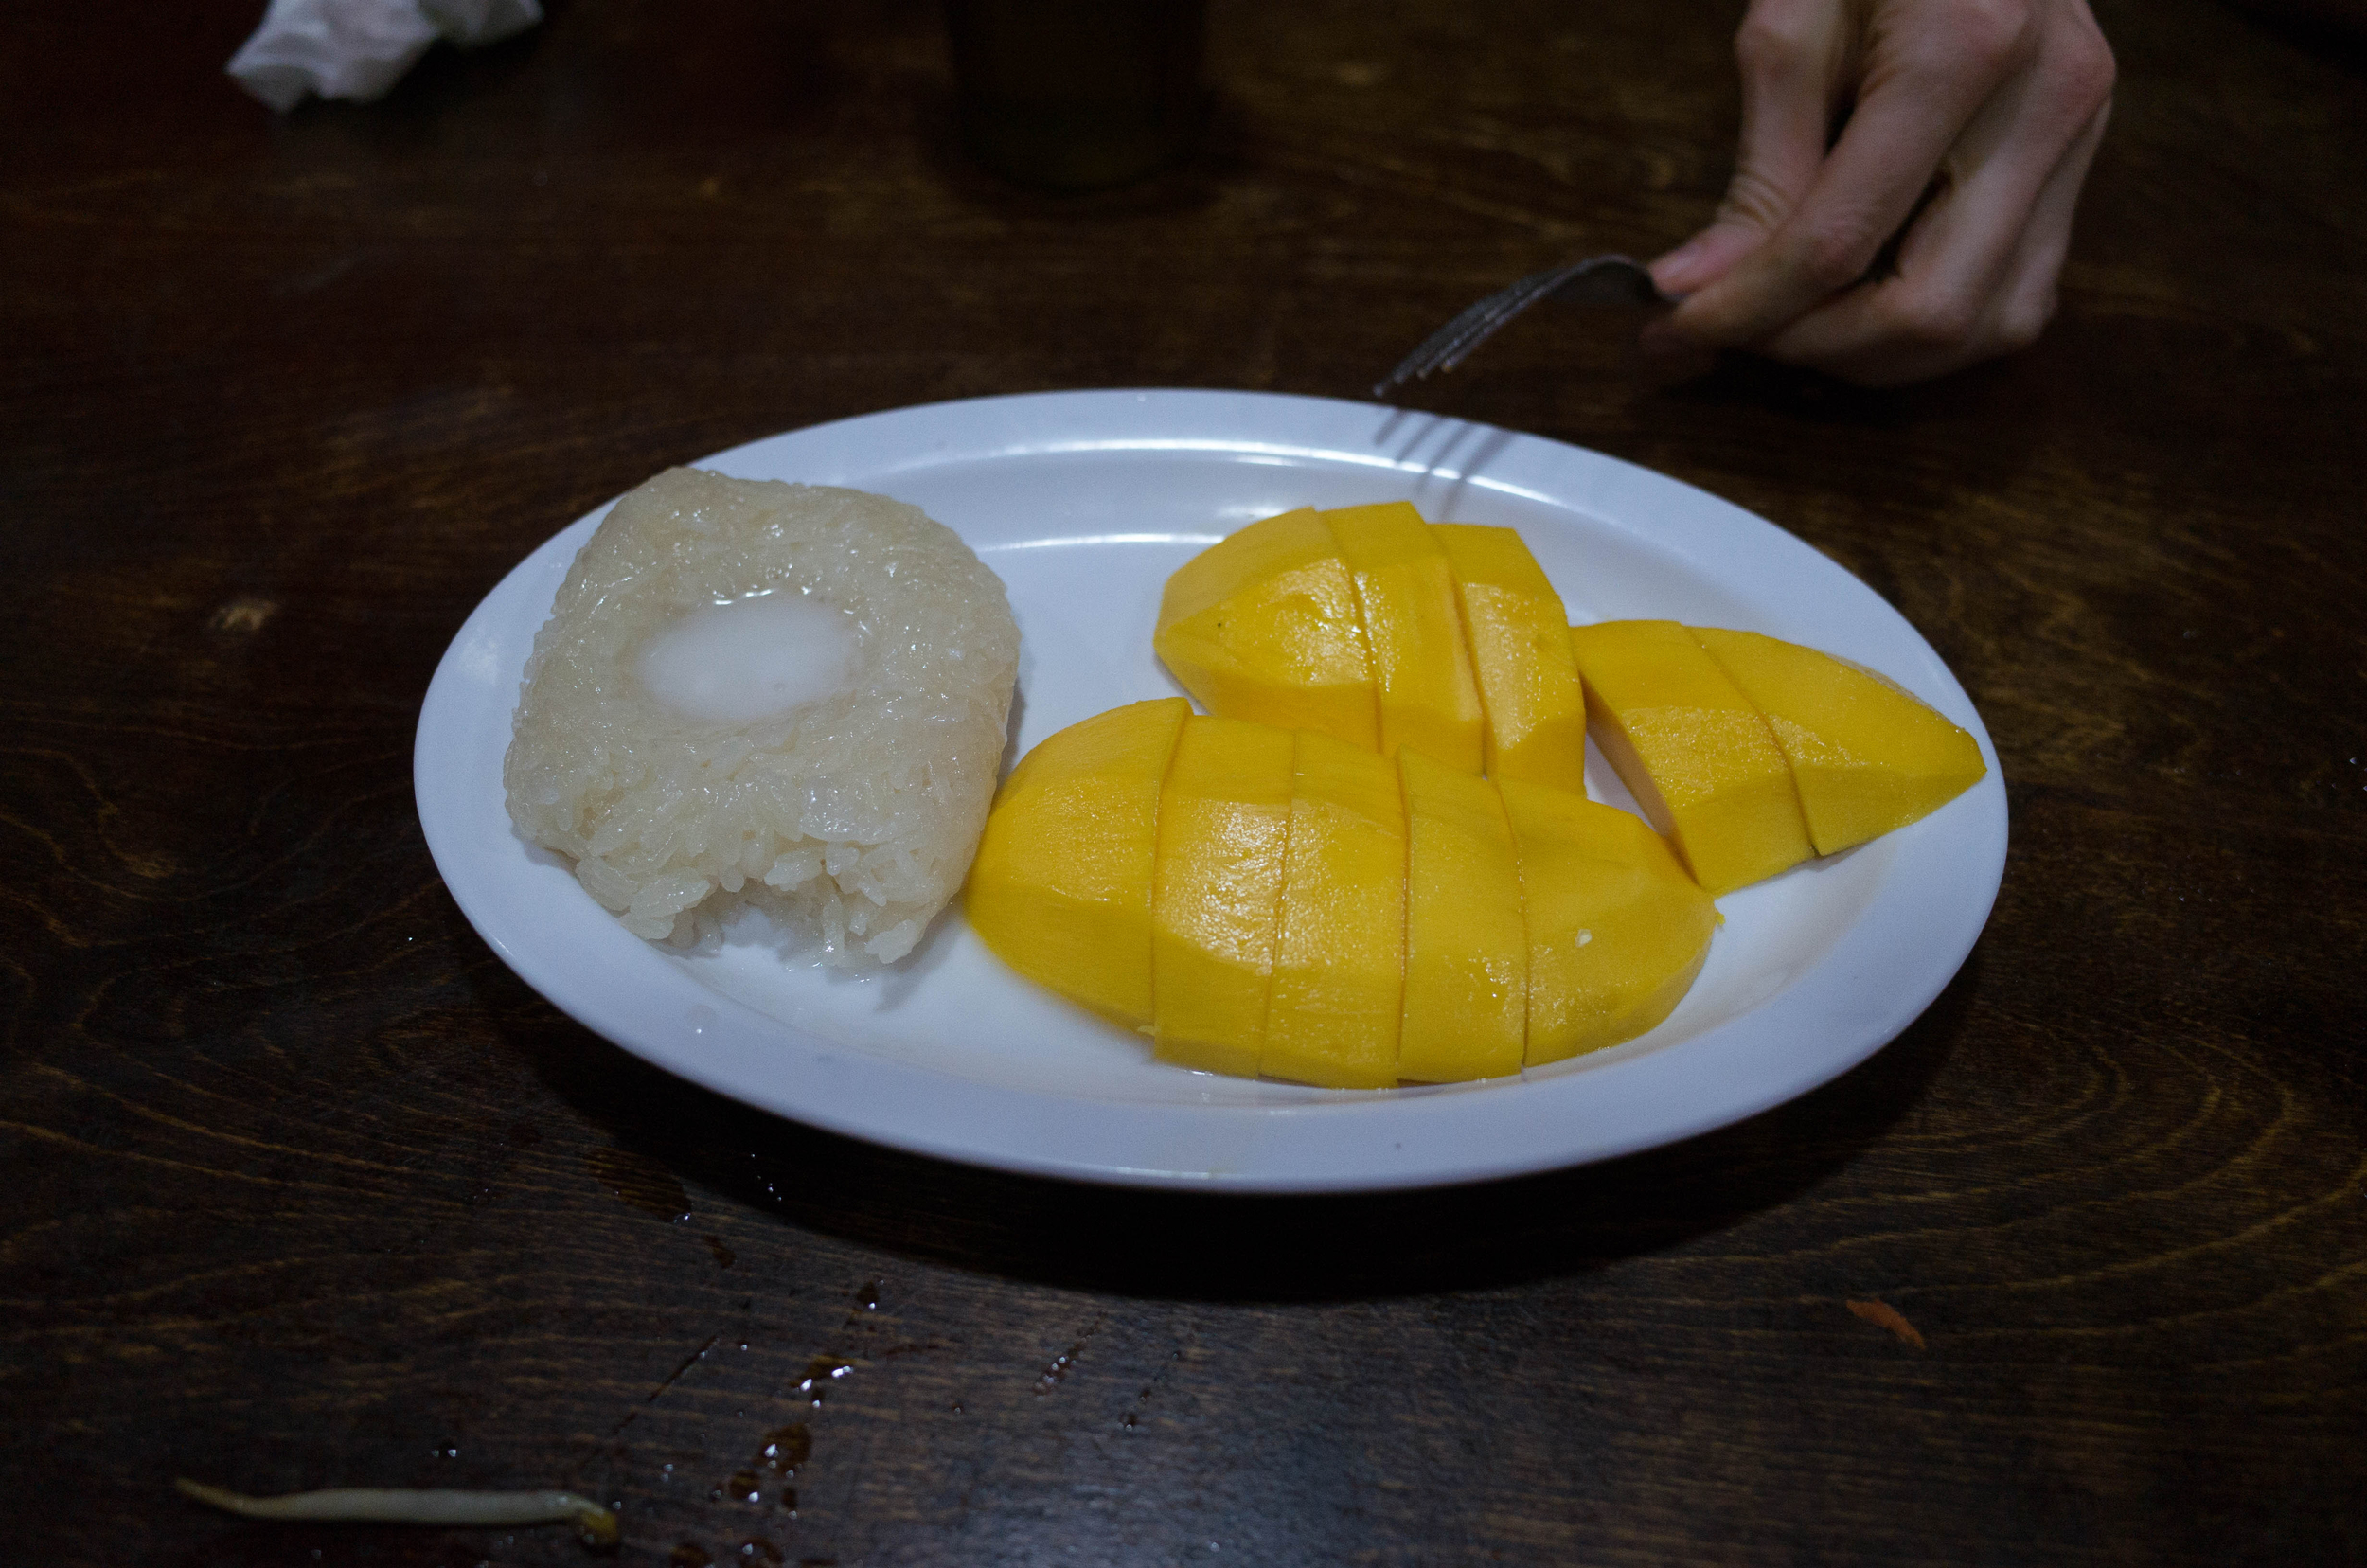  Mango and sticky rice, the tried and true Thai dessert staple 